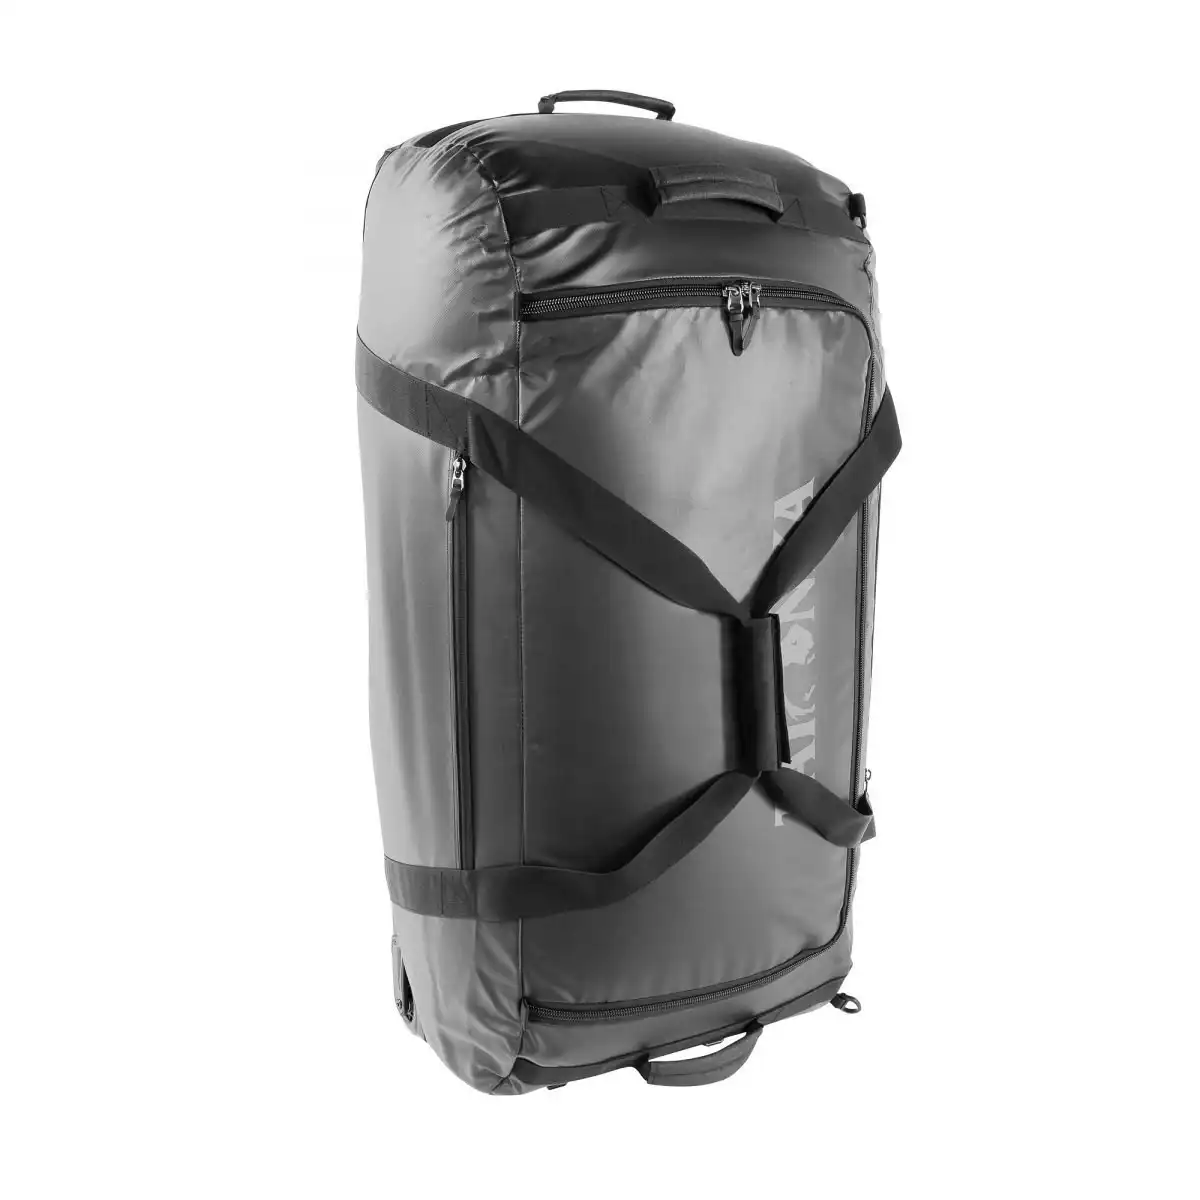 Tatonka 104cm 135L Flight Travel Bag Roller/Luggage/Suitcase/Wheels Large Black